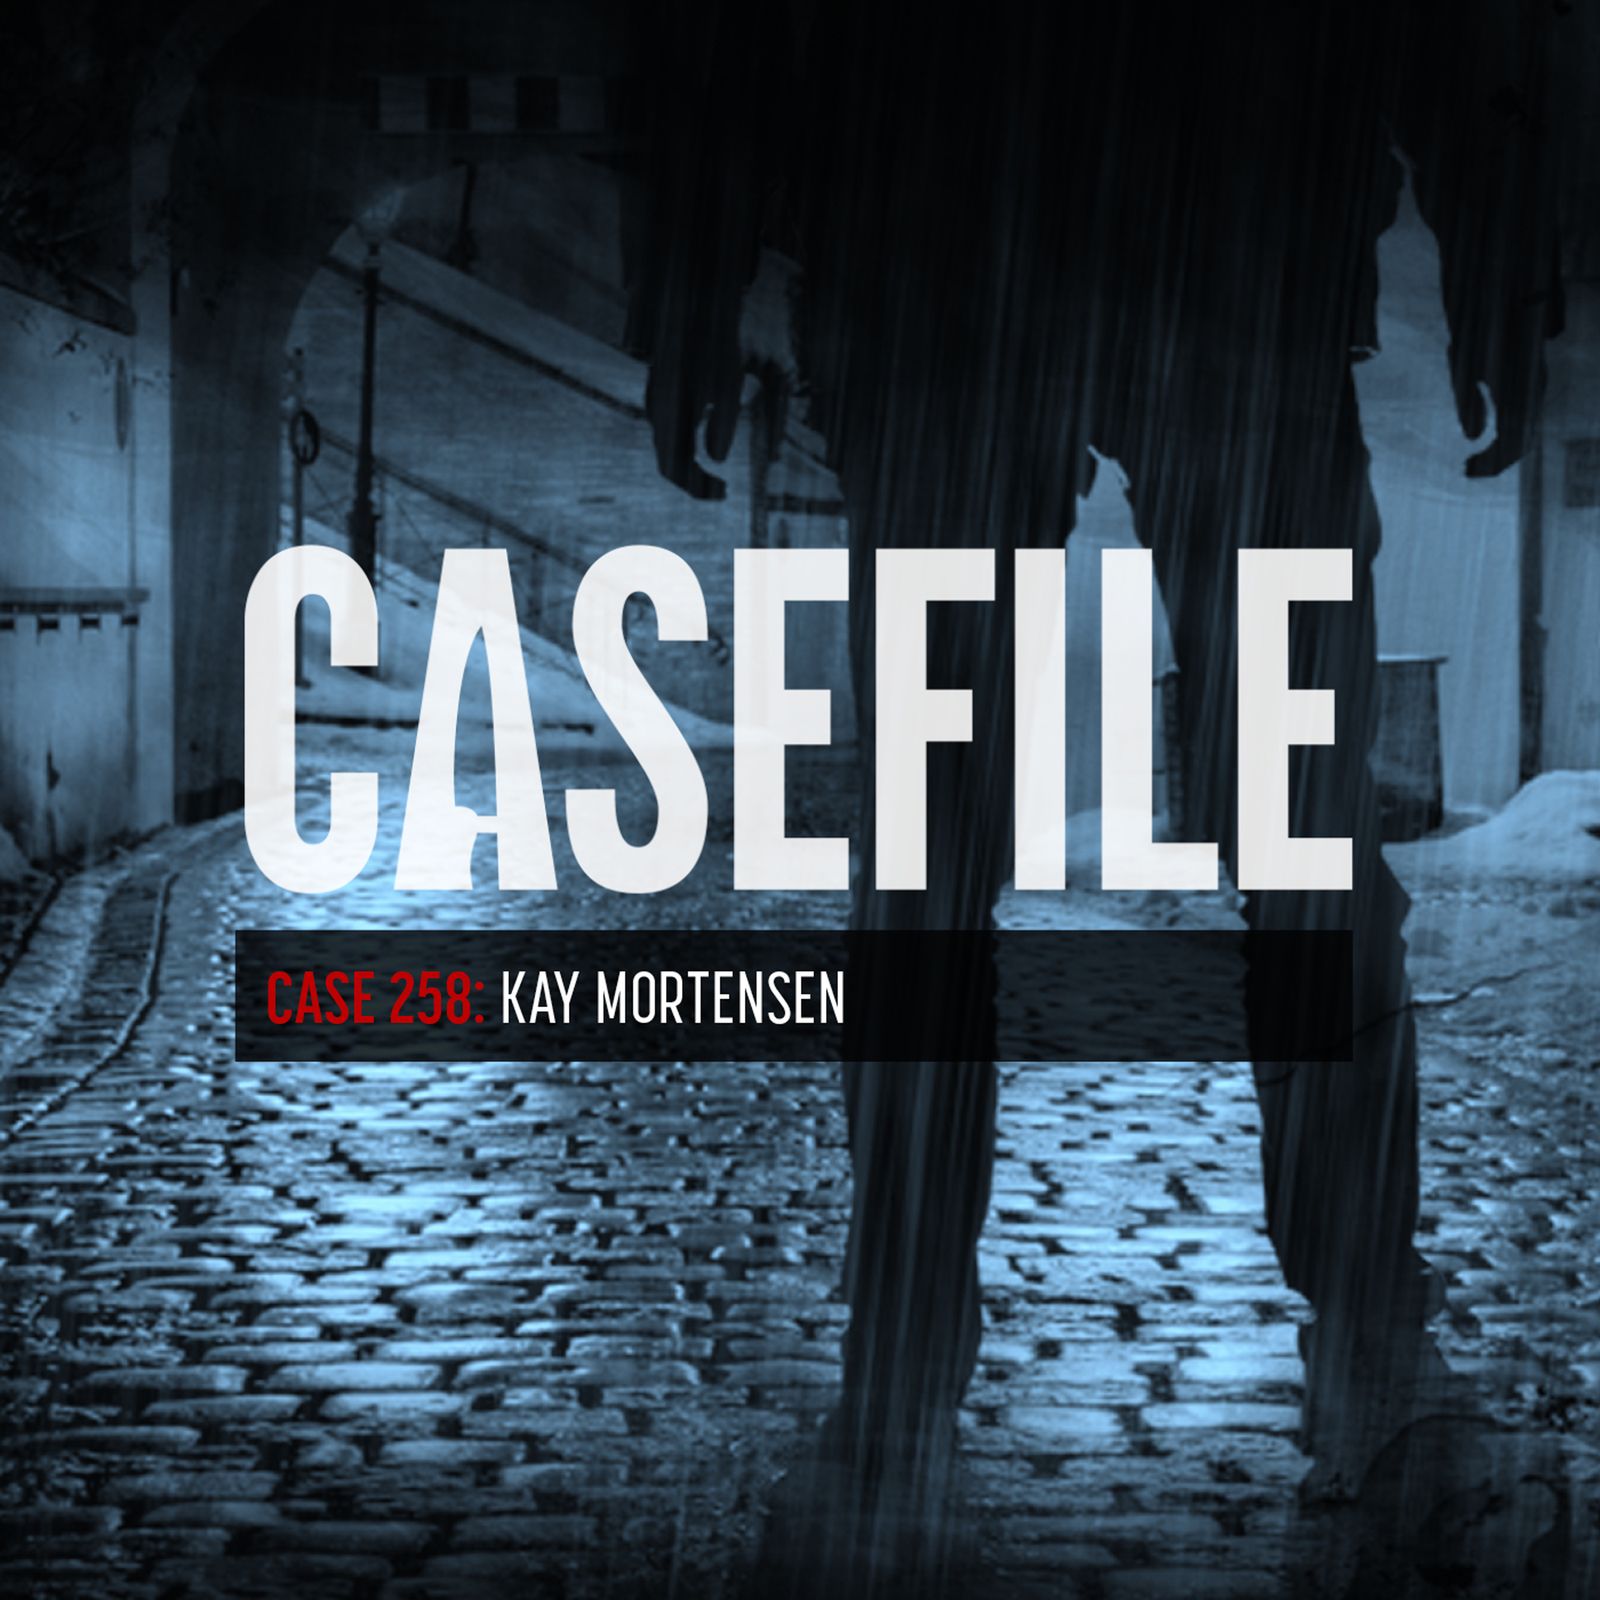 Case 258: Kay Mortensen